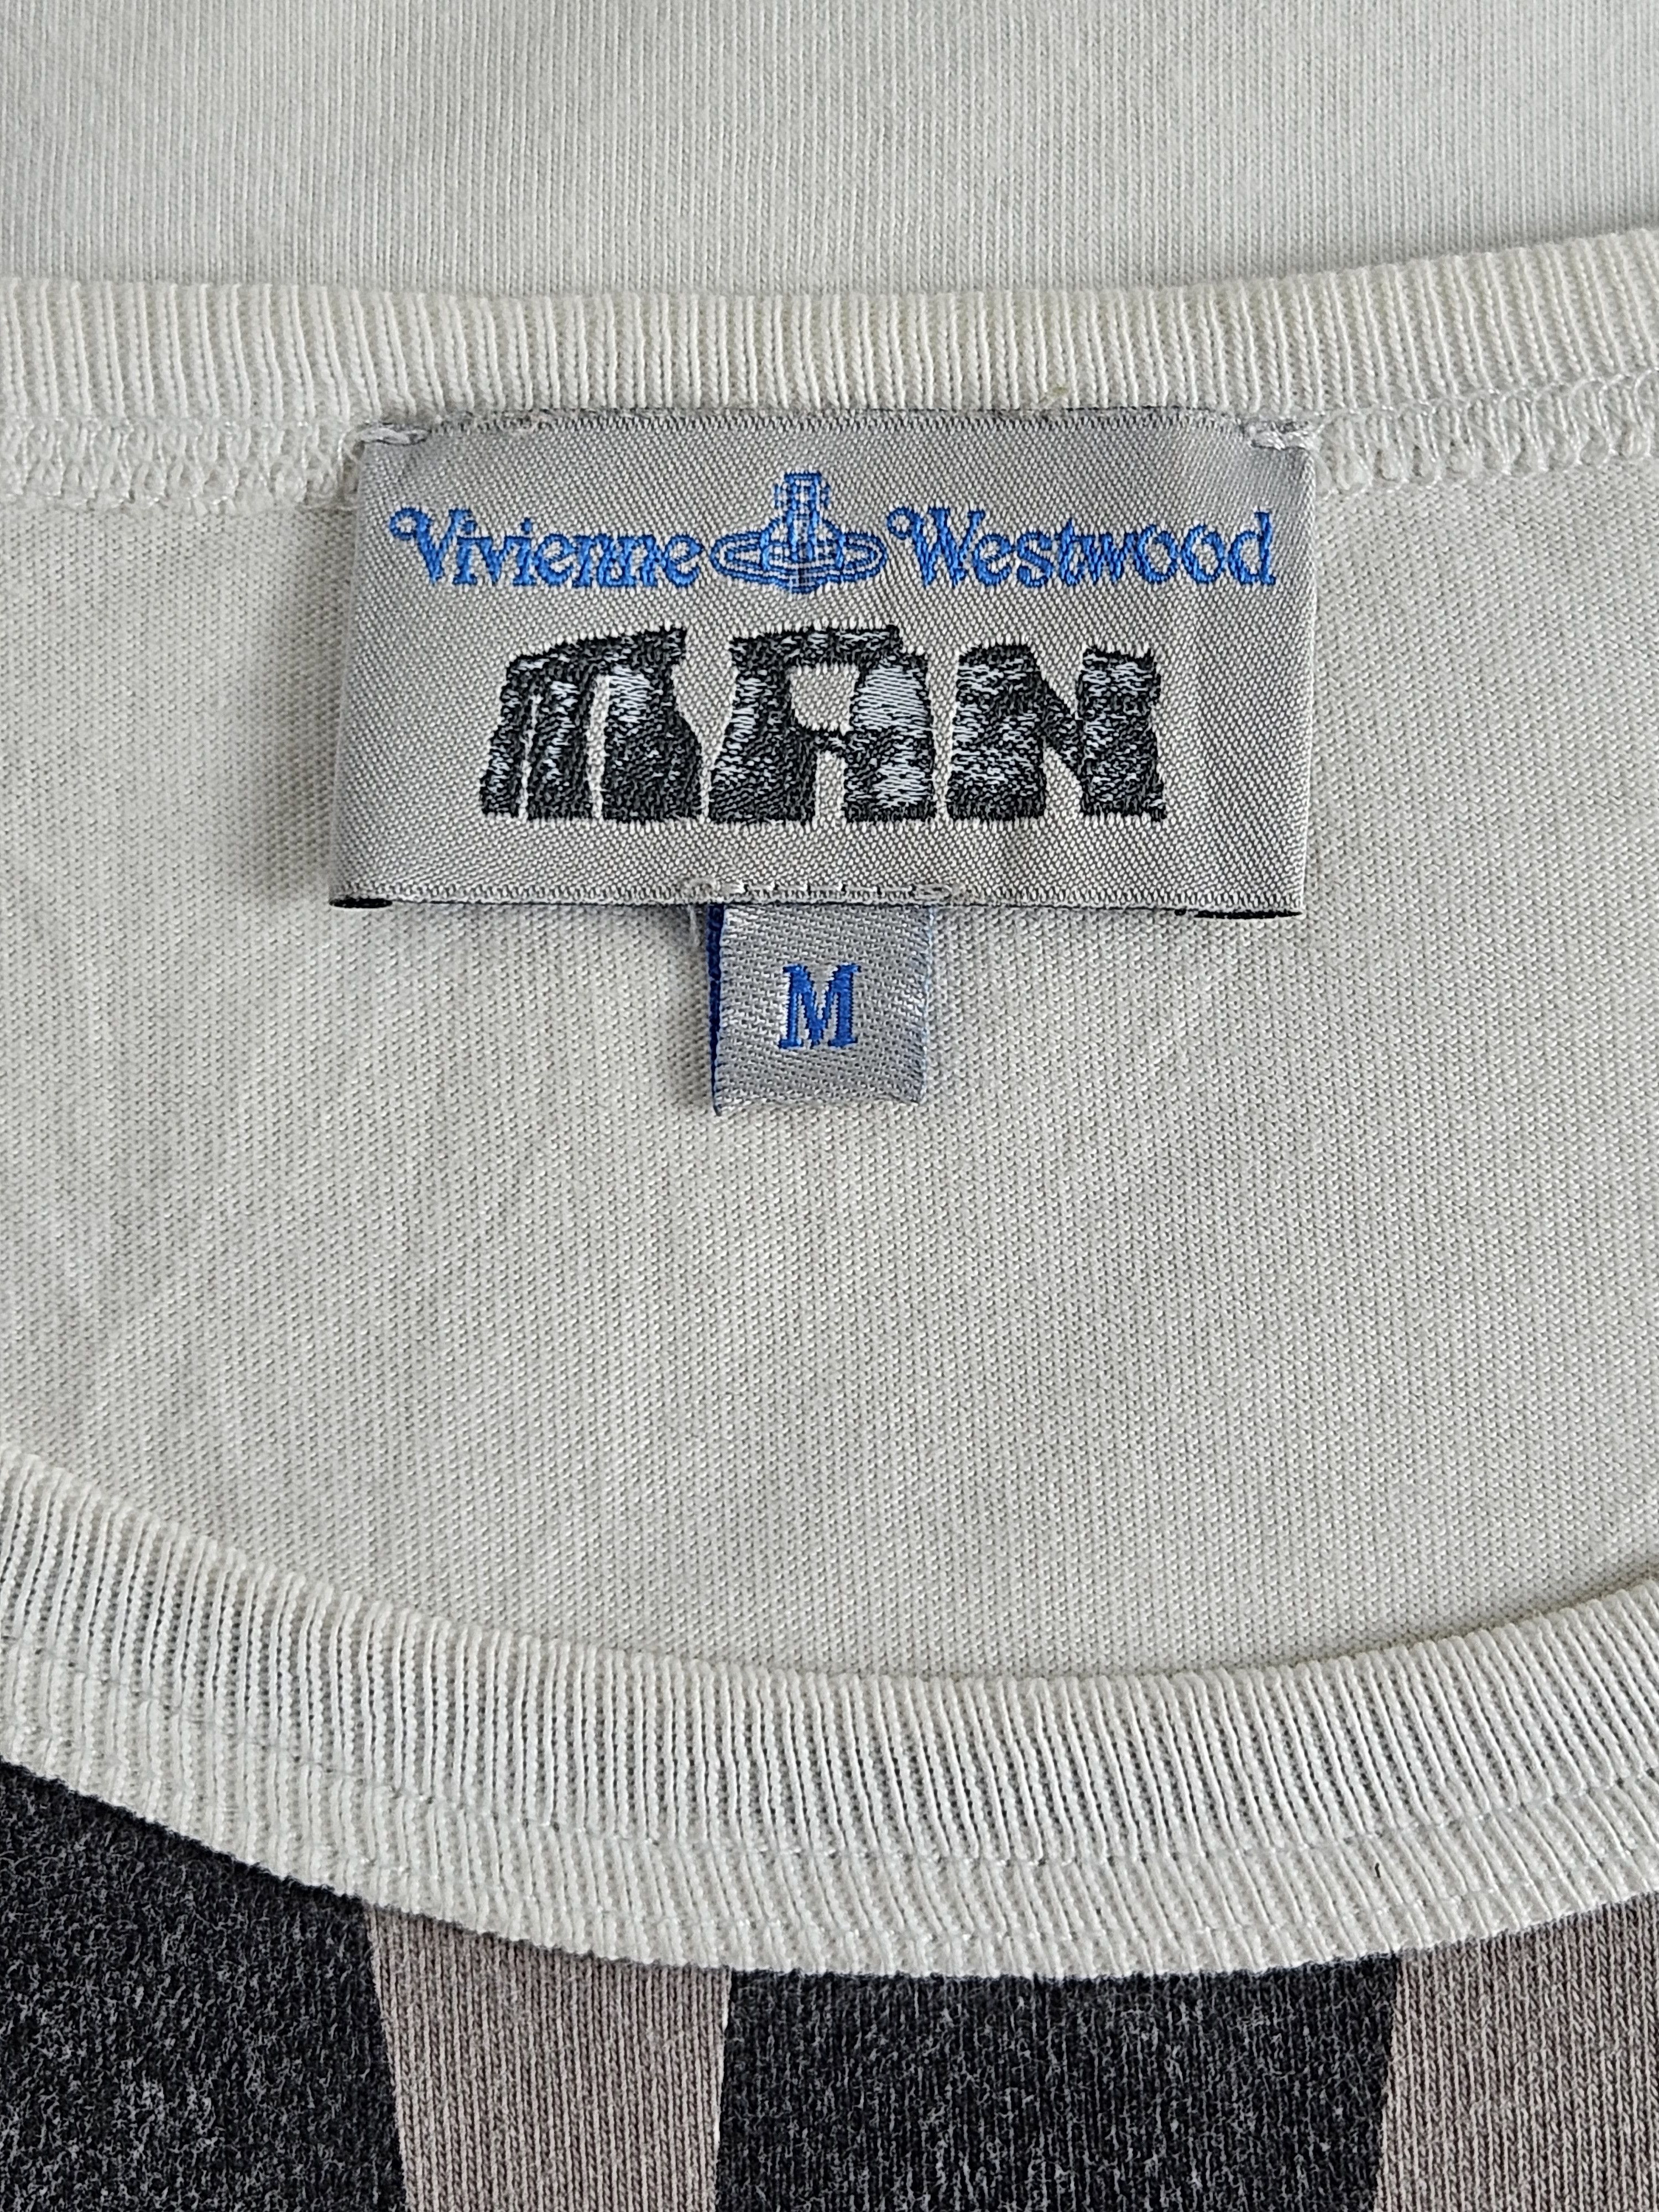 Vivienne Westwood Man Shirt - 4